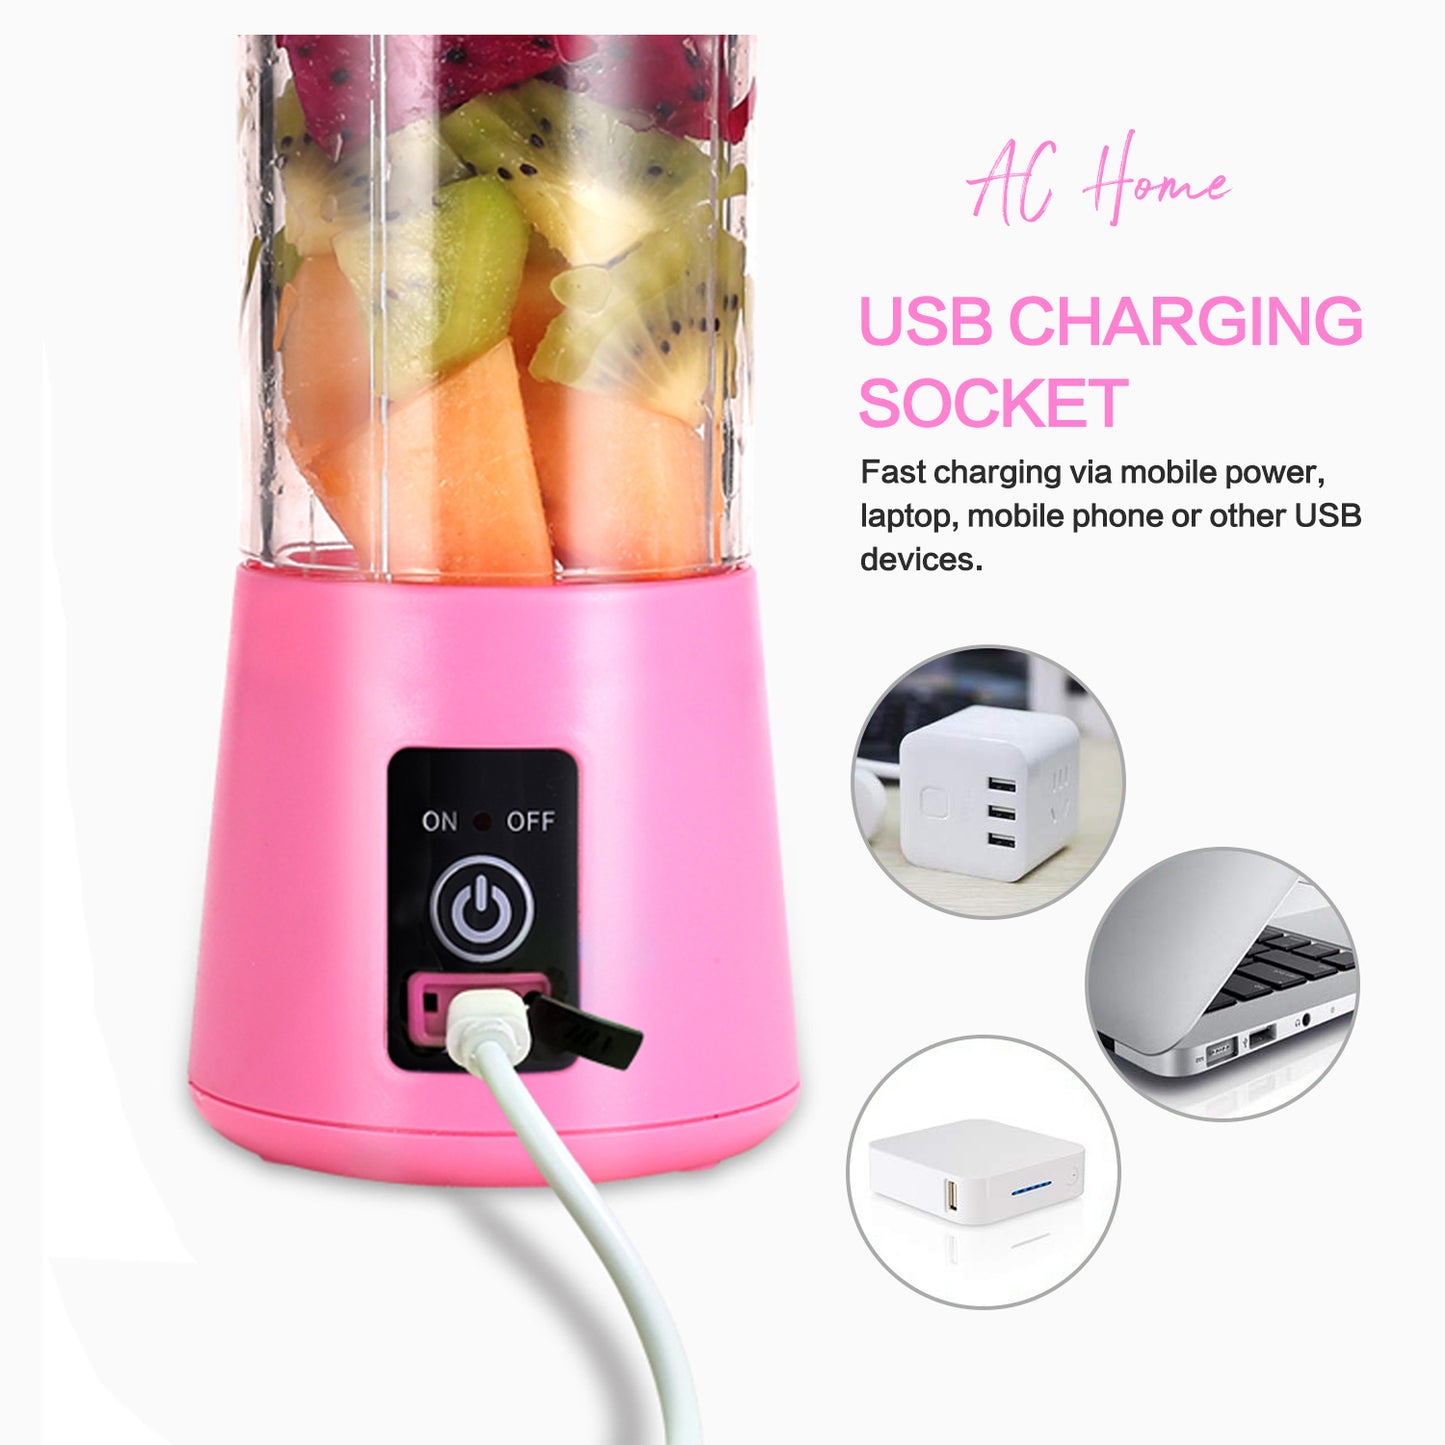 Household Portable Juicer Blender Household Fruit Mixer- Six Blades in 3D 380ml USB Juicer Cup